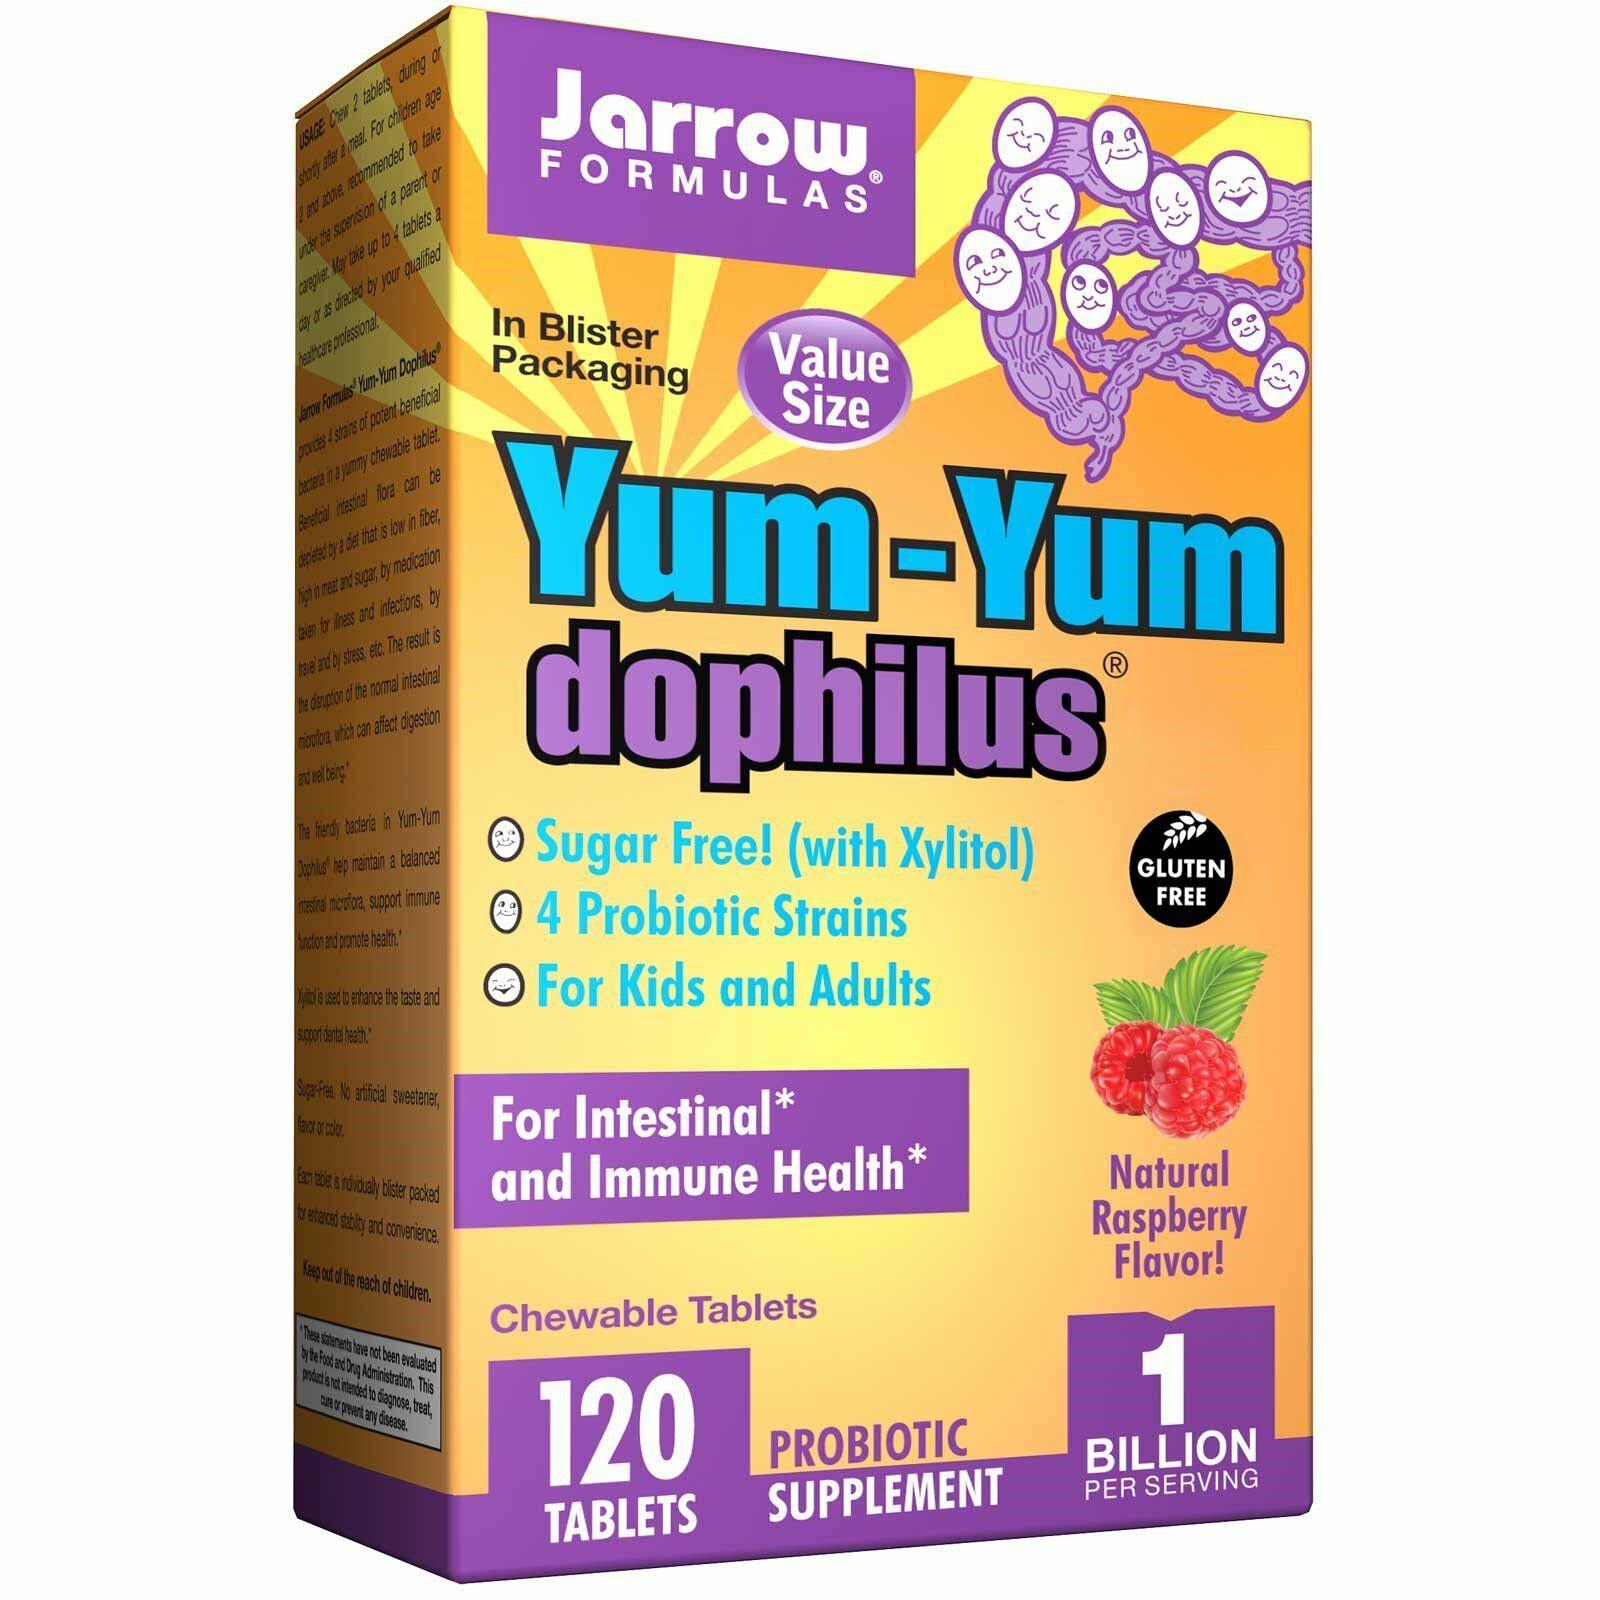 Jarrow Formulas Yum-yum Dophilus Probiotic Supplement - Raspberry Flavor, 120 Tablets